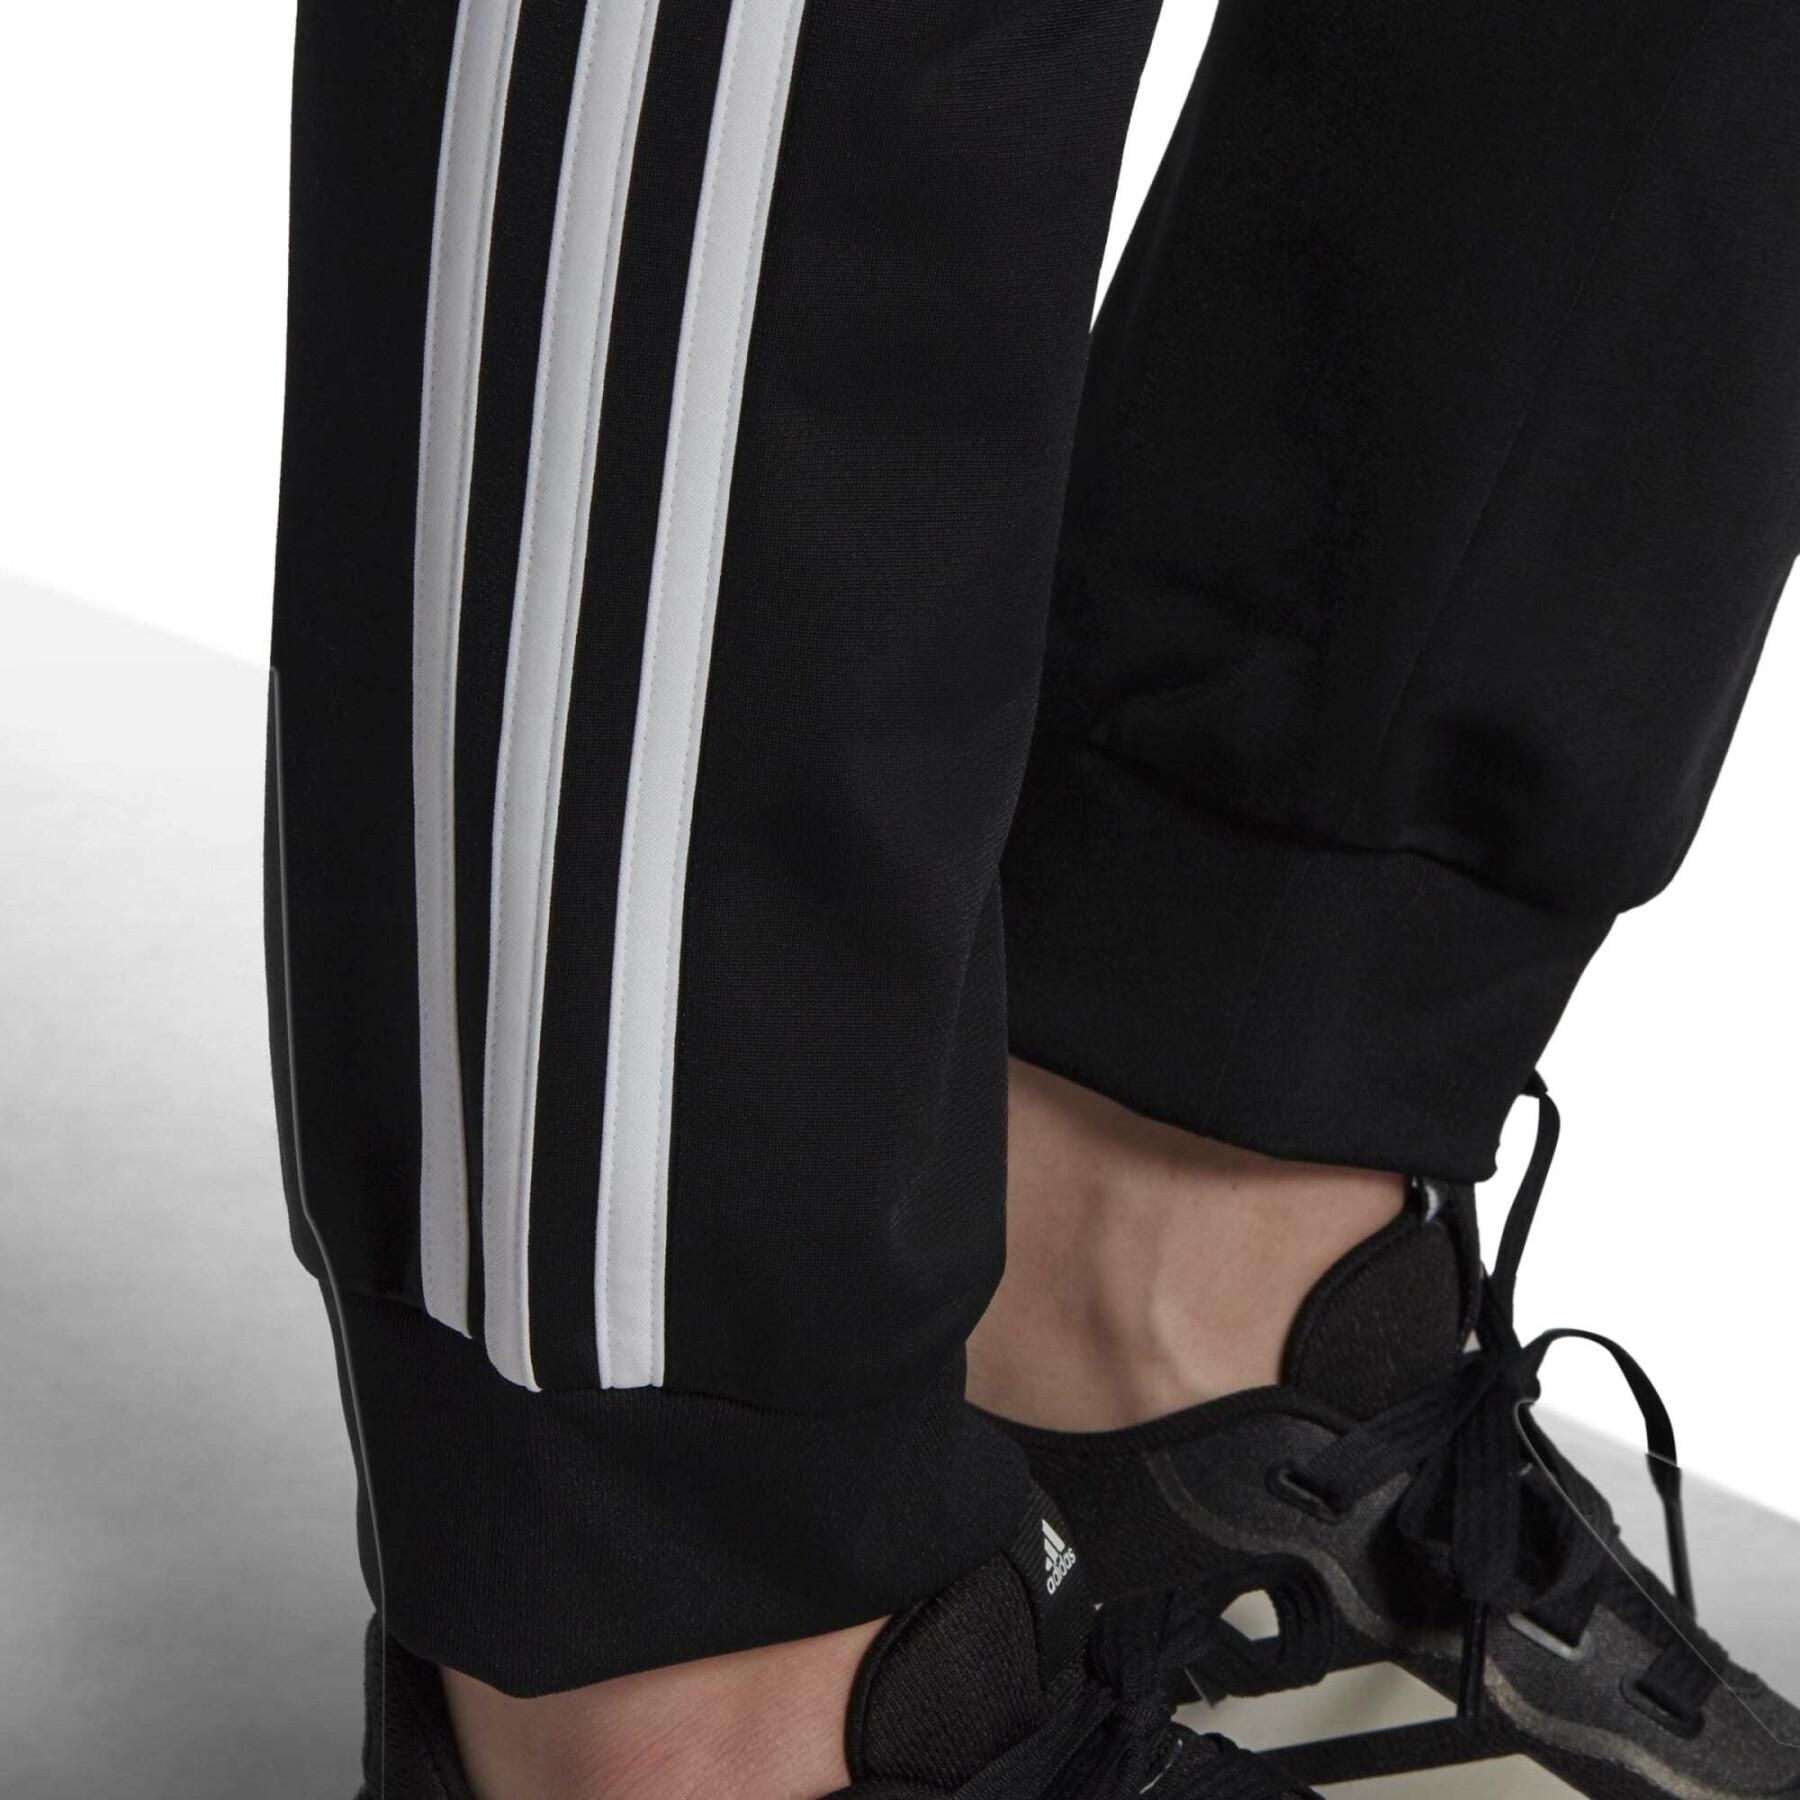 Damski strój do joggingu adidas Primegreen Essentials